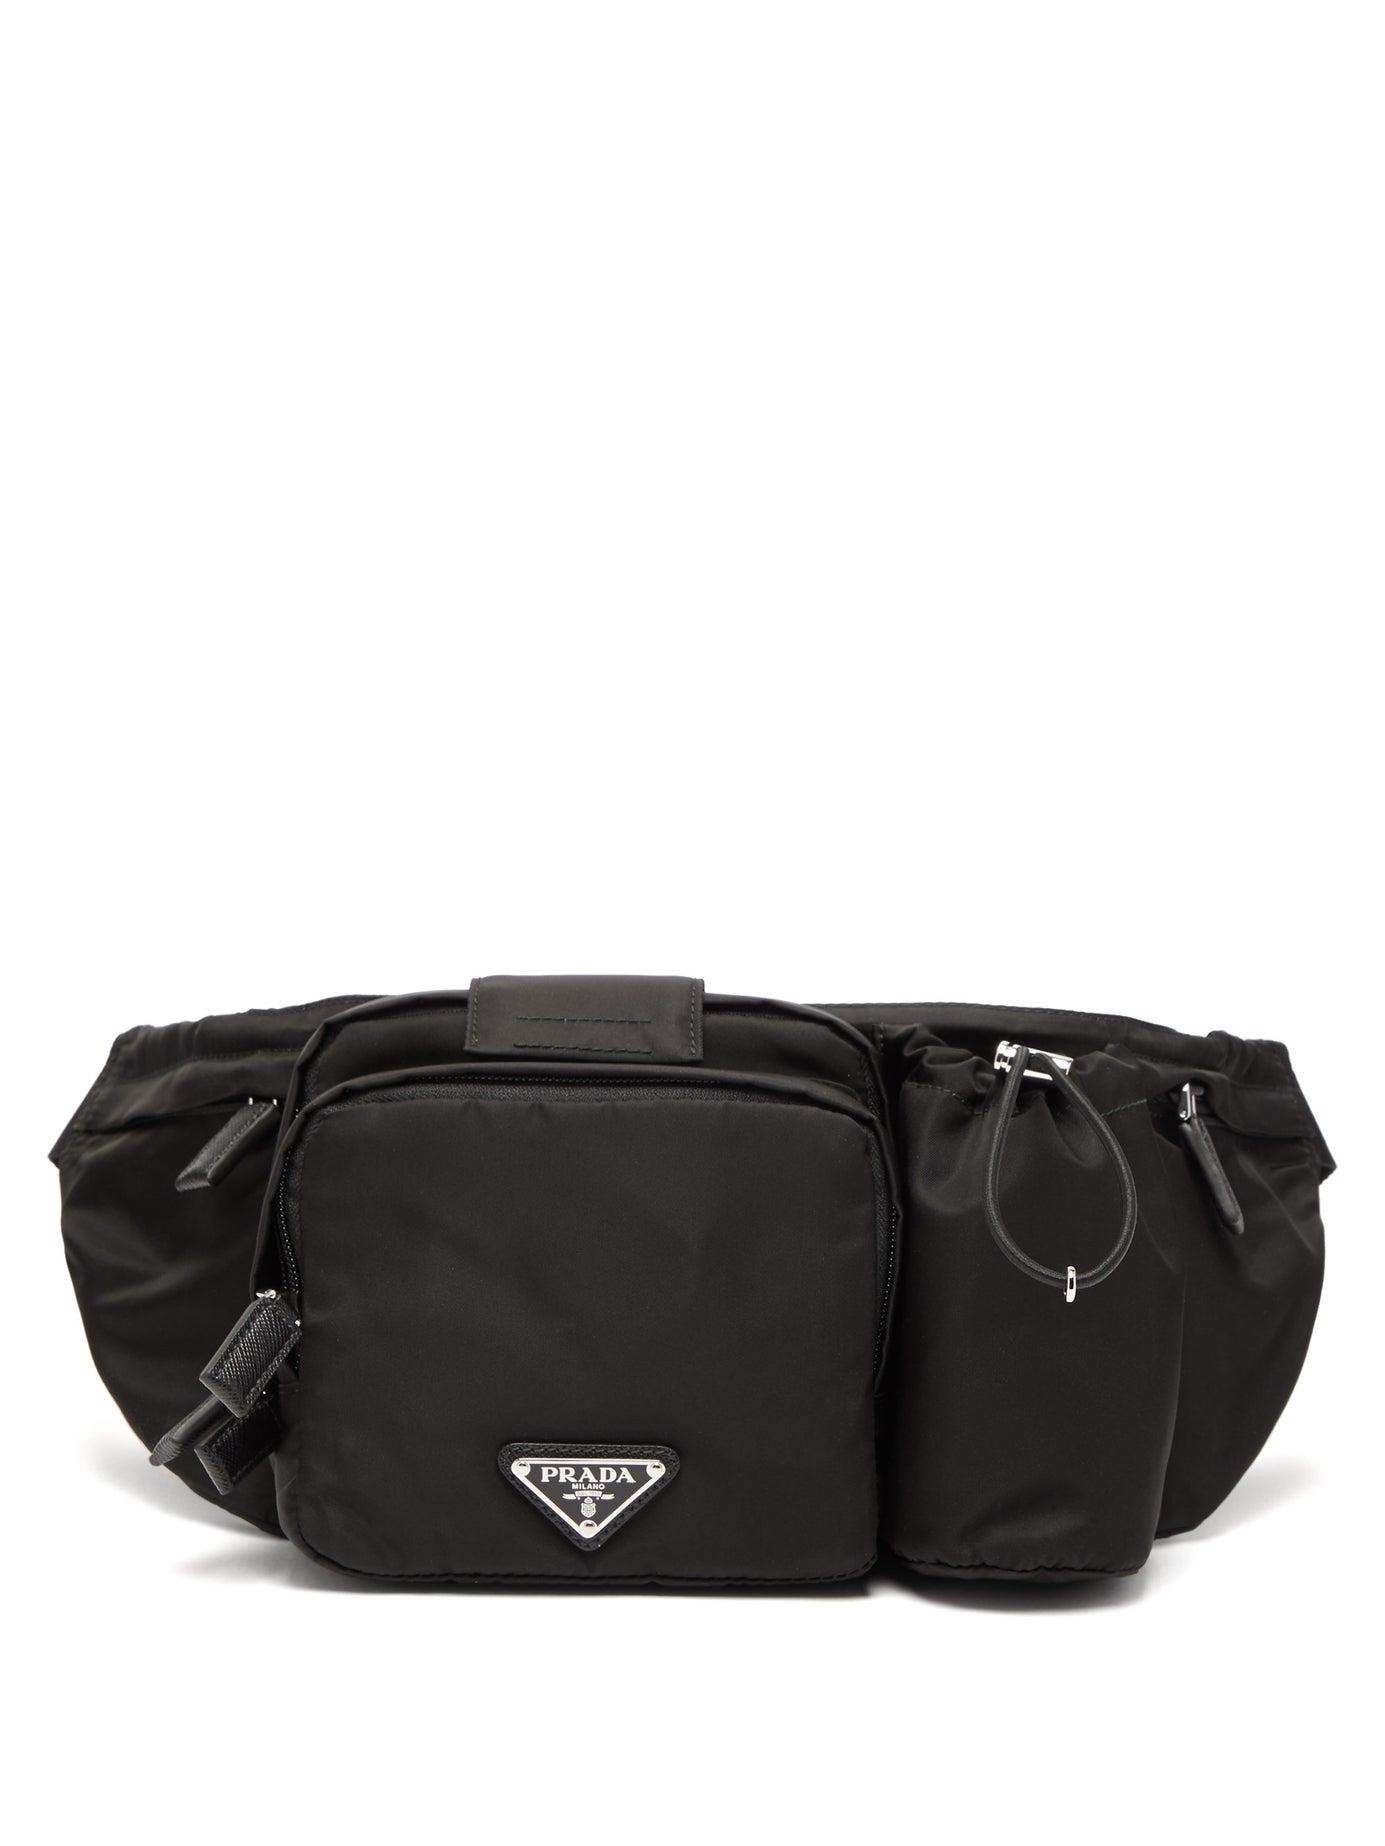 Prada Synthetic Square Nylon Belt Bag in Black for Men - Lyst